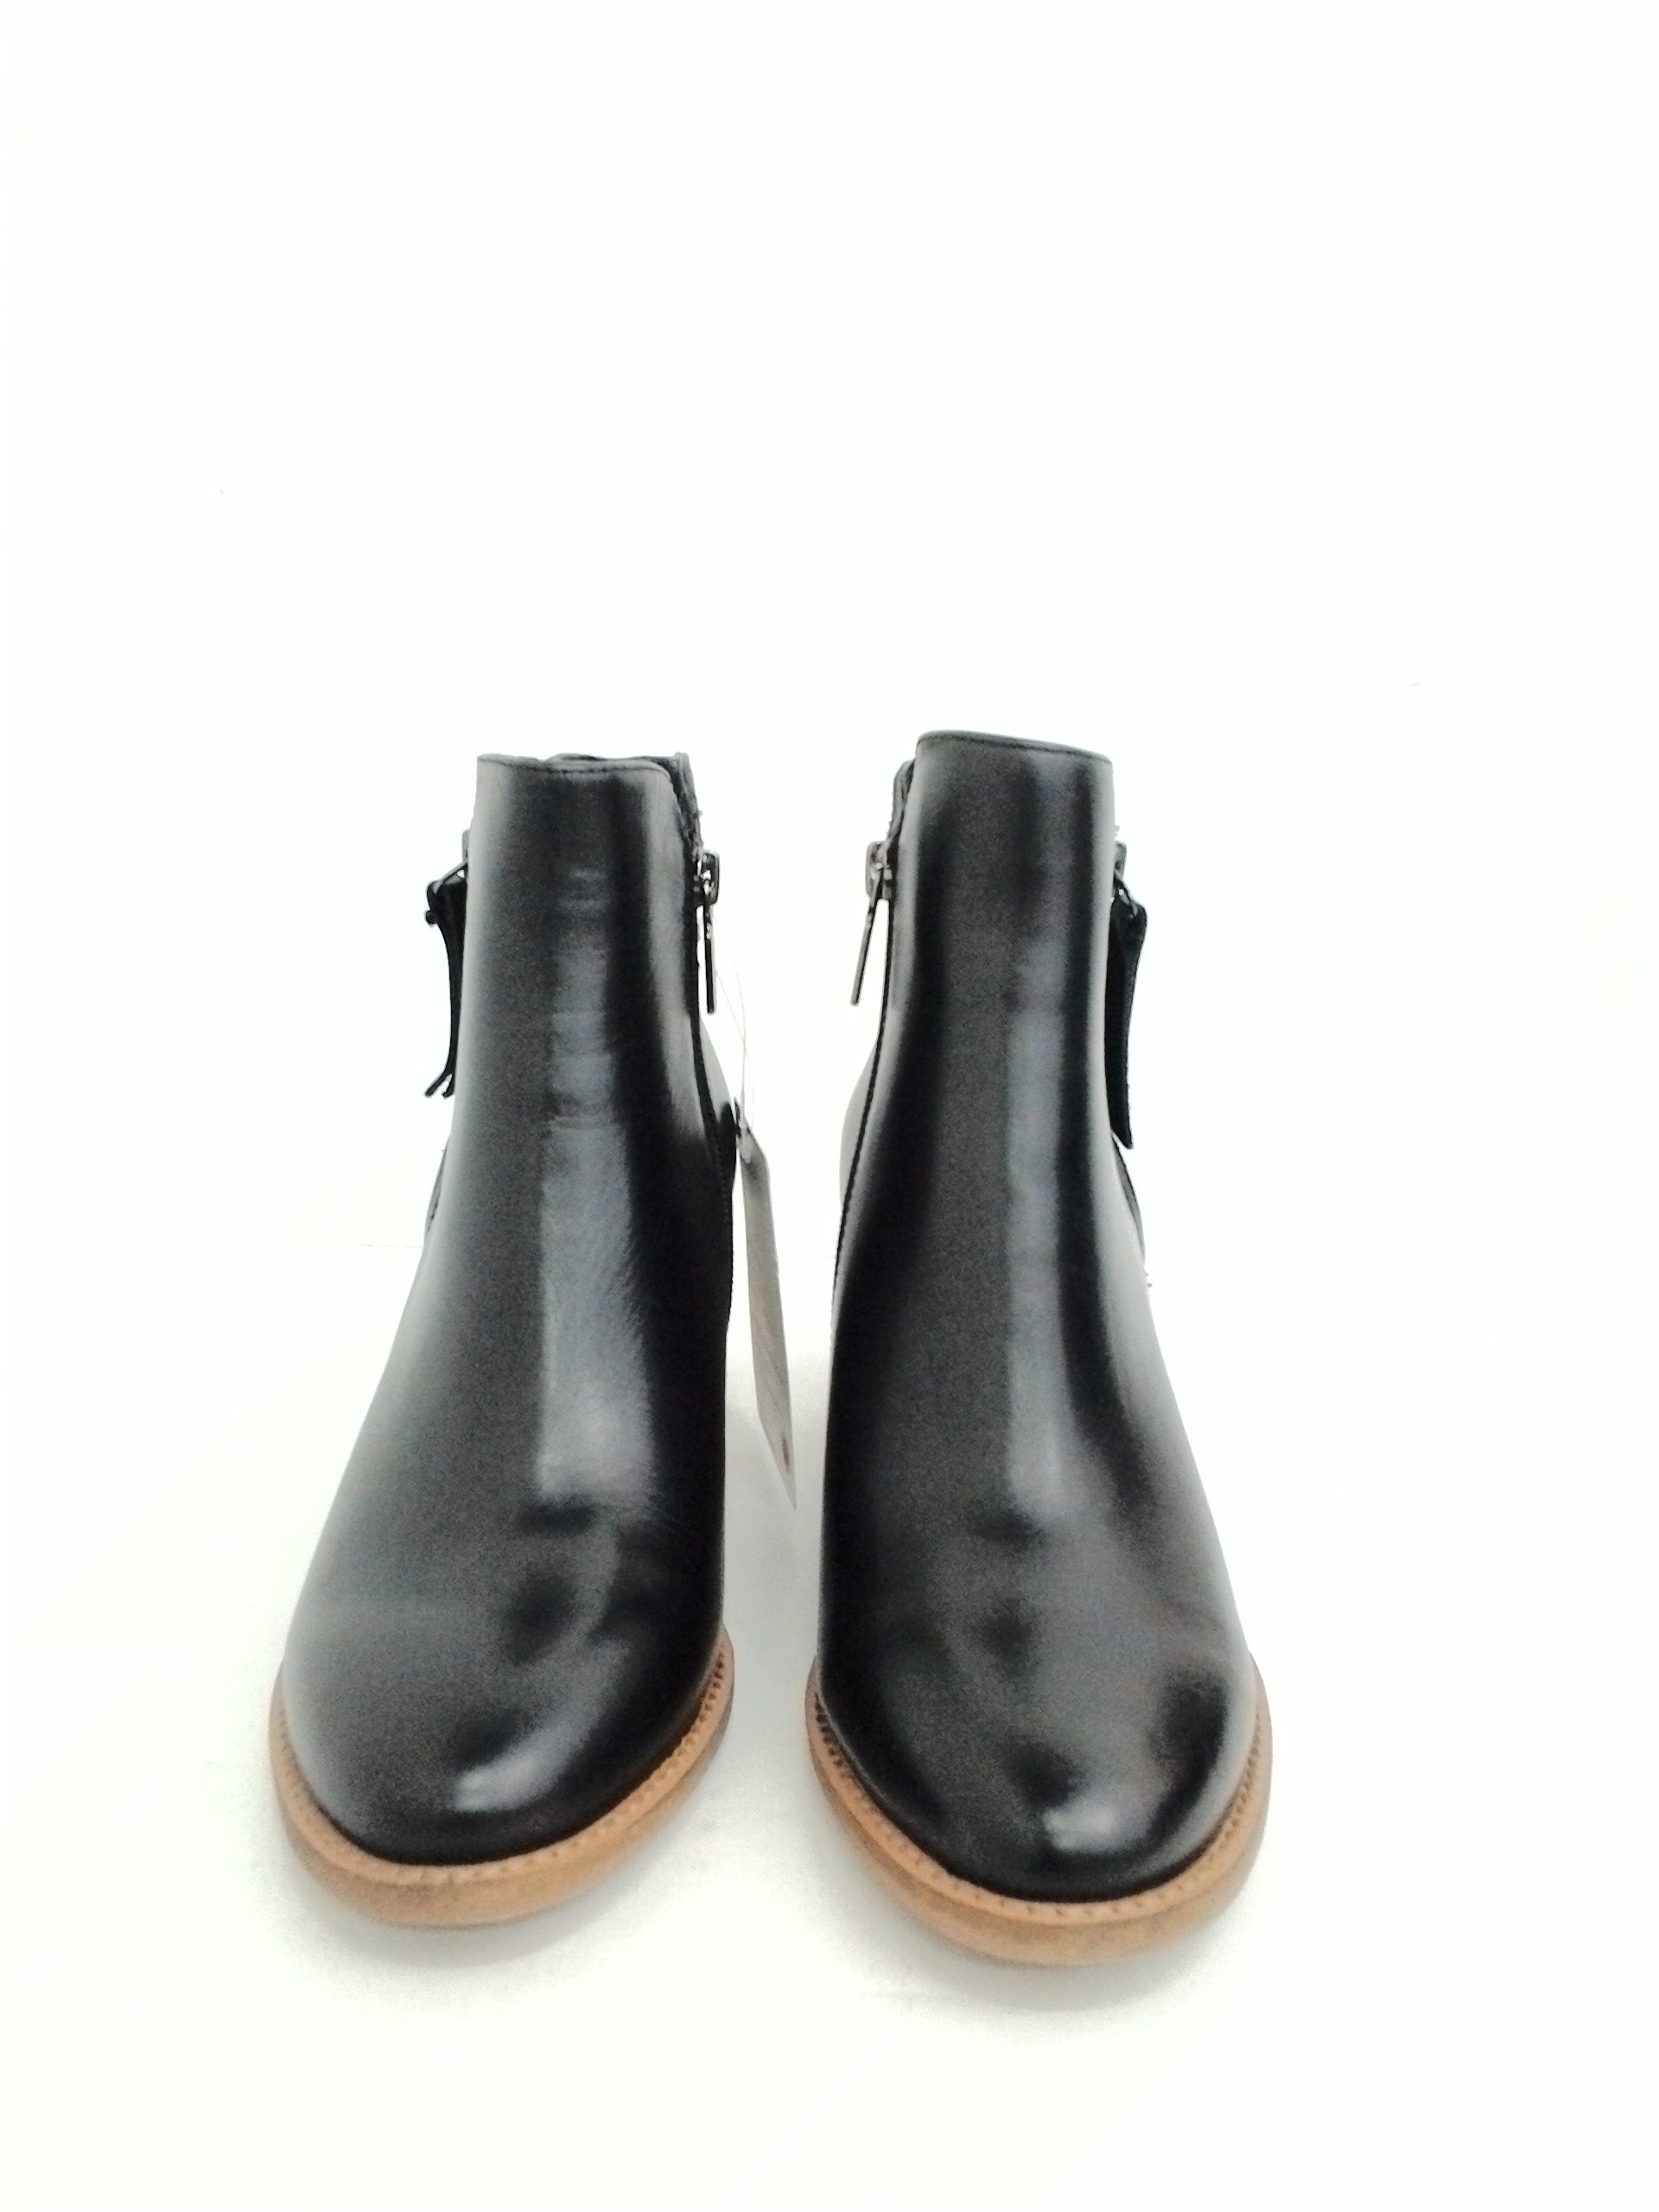 Aqua College Women's Naara Black Leather Booties Size 7.5 - Prime Shoes ...